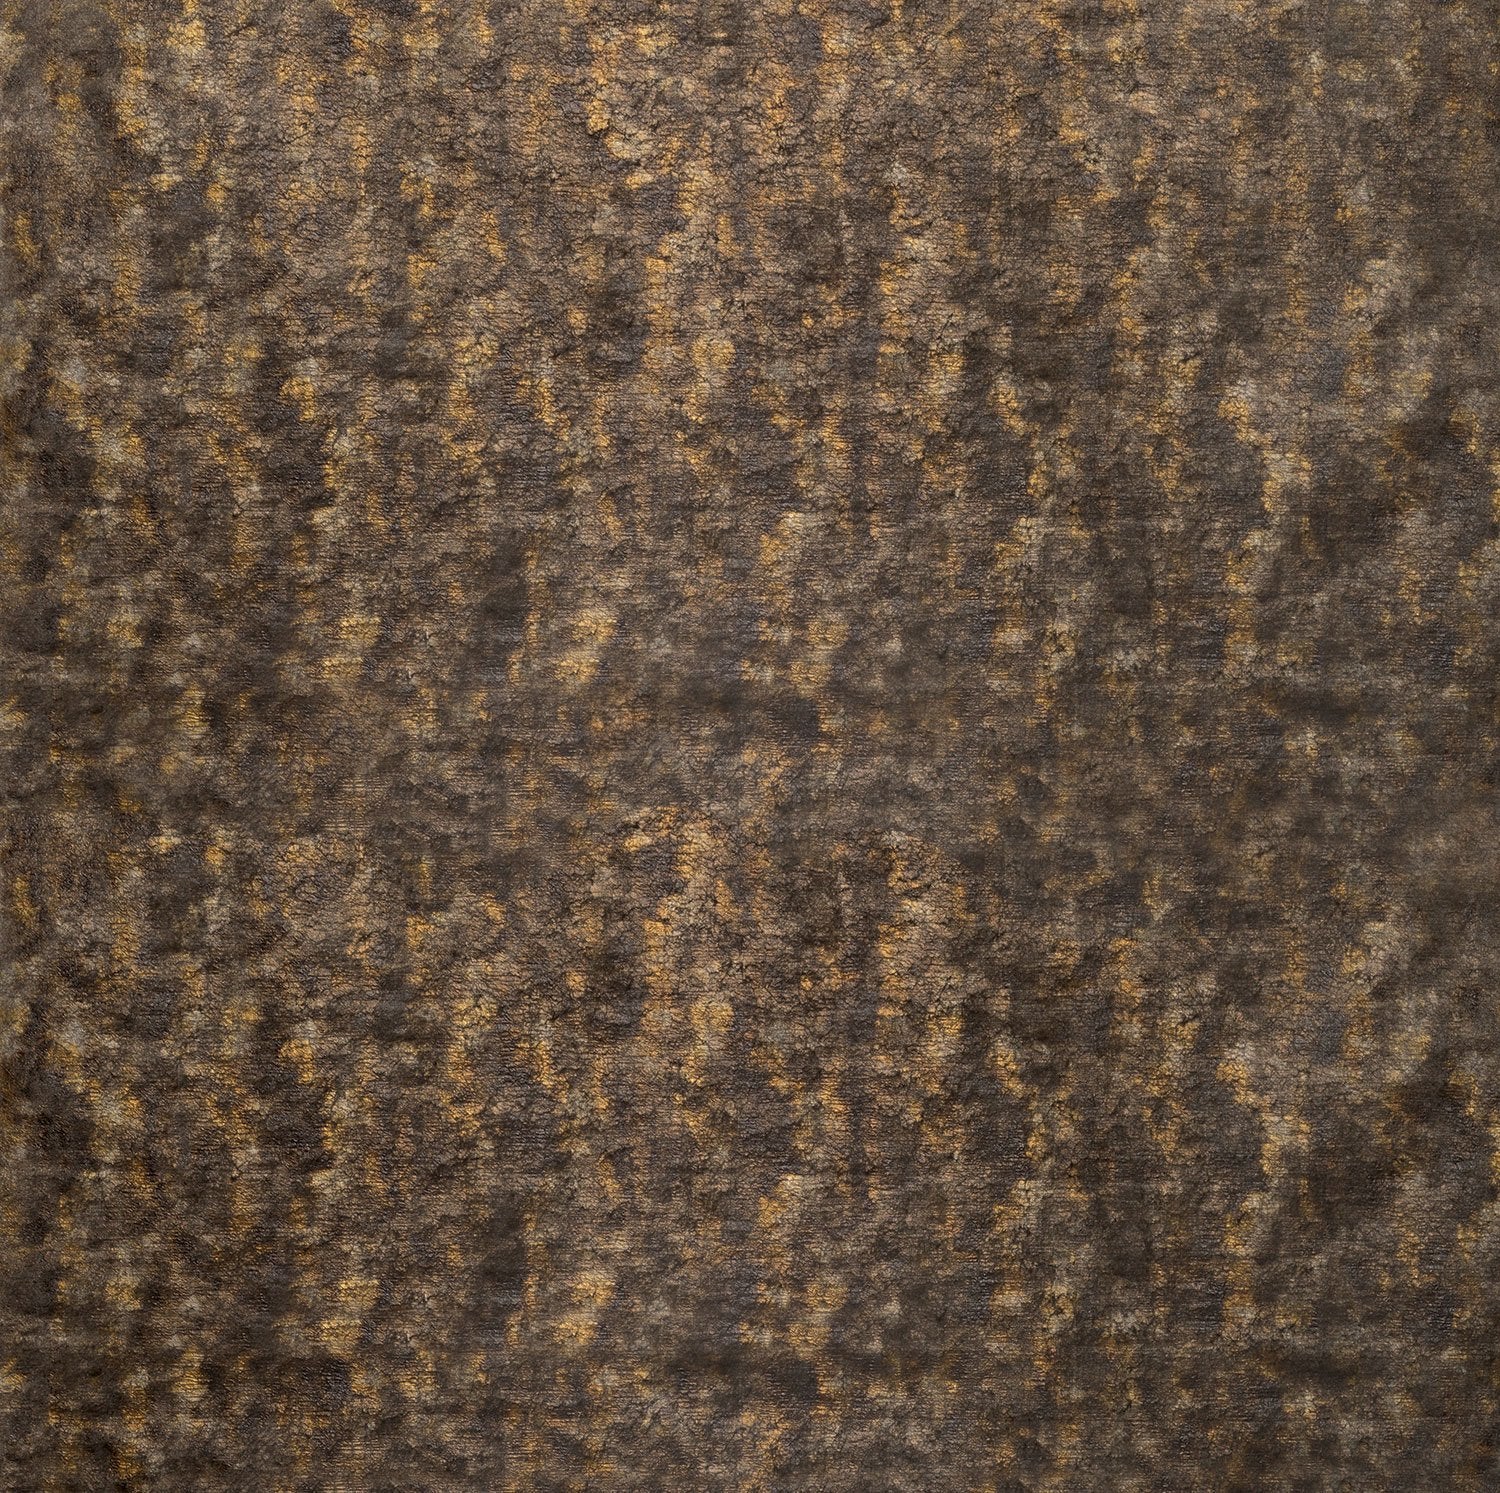 Nina Campbell Fabric - Gioconda Duccio Chocolate NCF4253-03